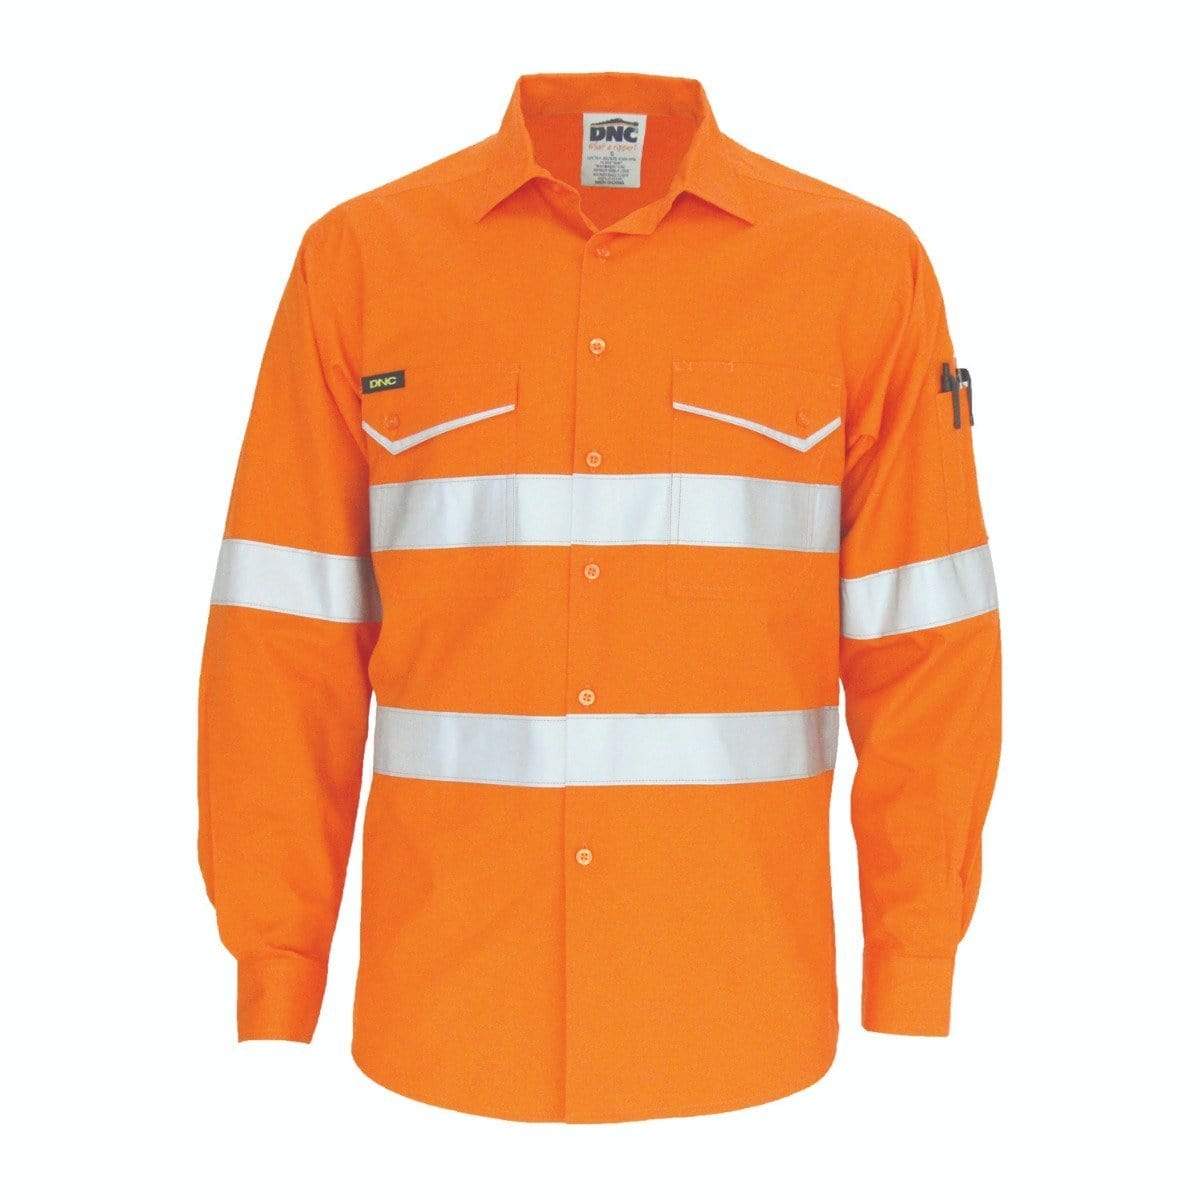 Dnc Workwear Hi-vis Ripstop Cotton Cool Long Sleeve Shirt With Csr Reflective Tape - 3590 Work Wear DNC Workwear Orange XS 